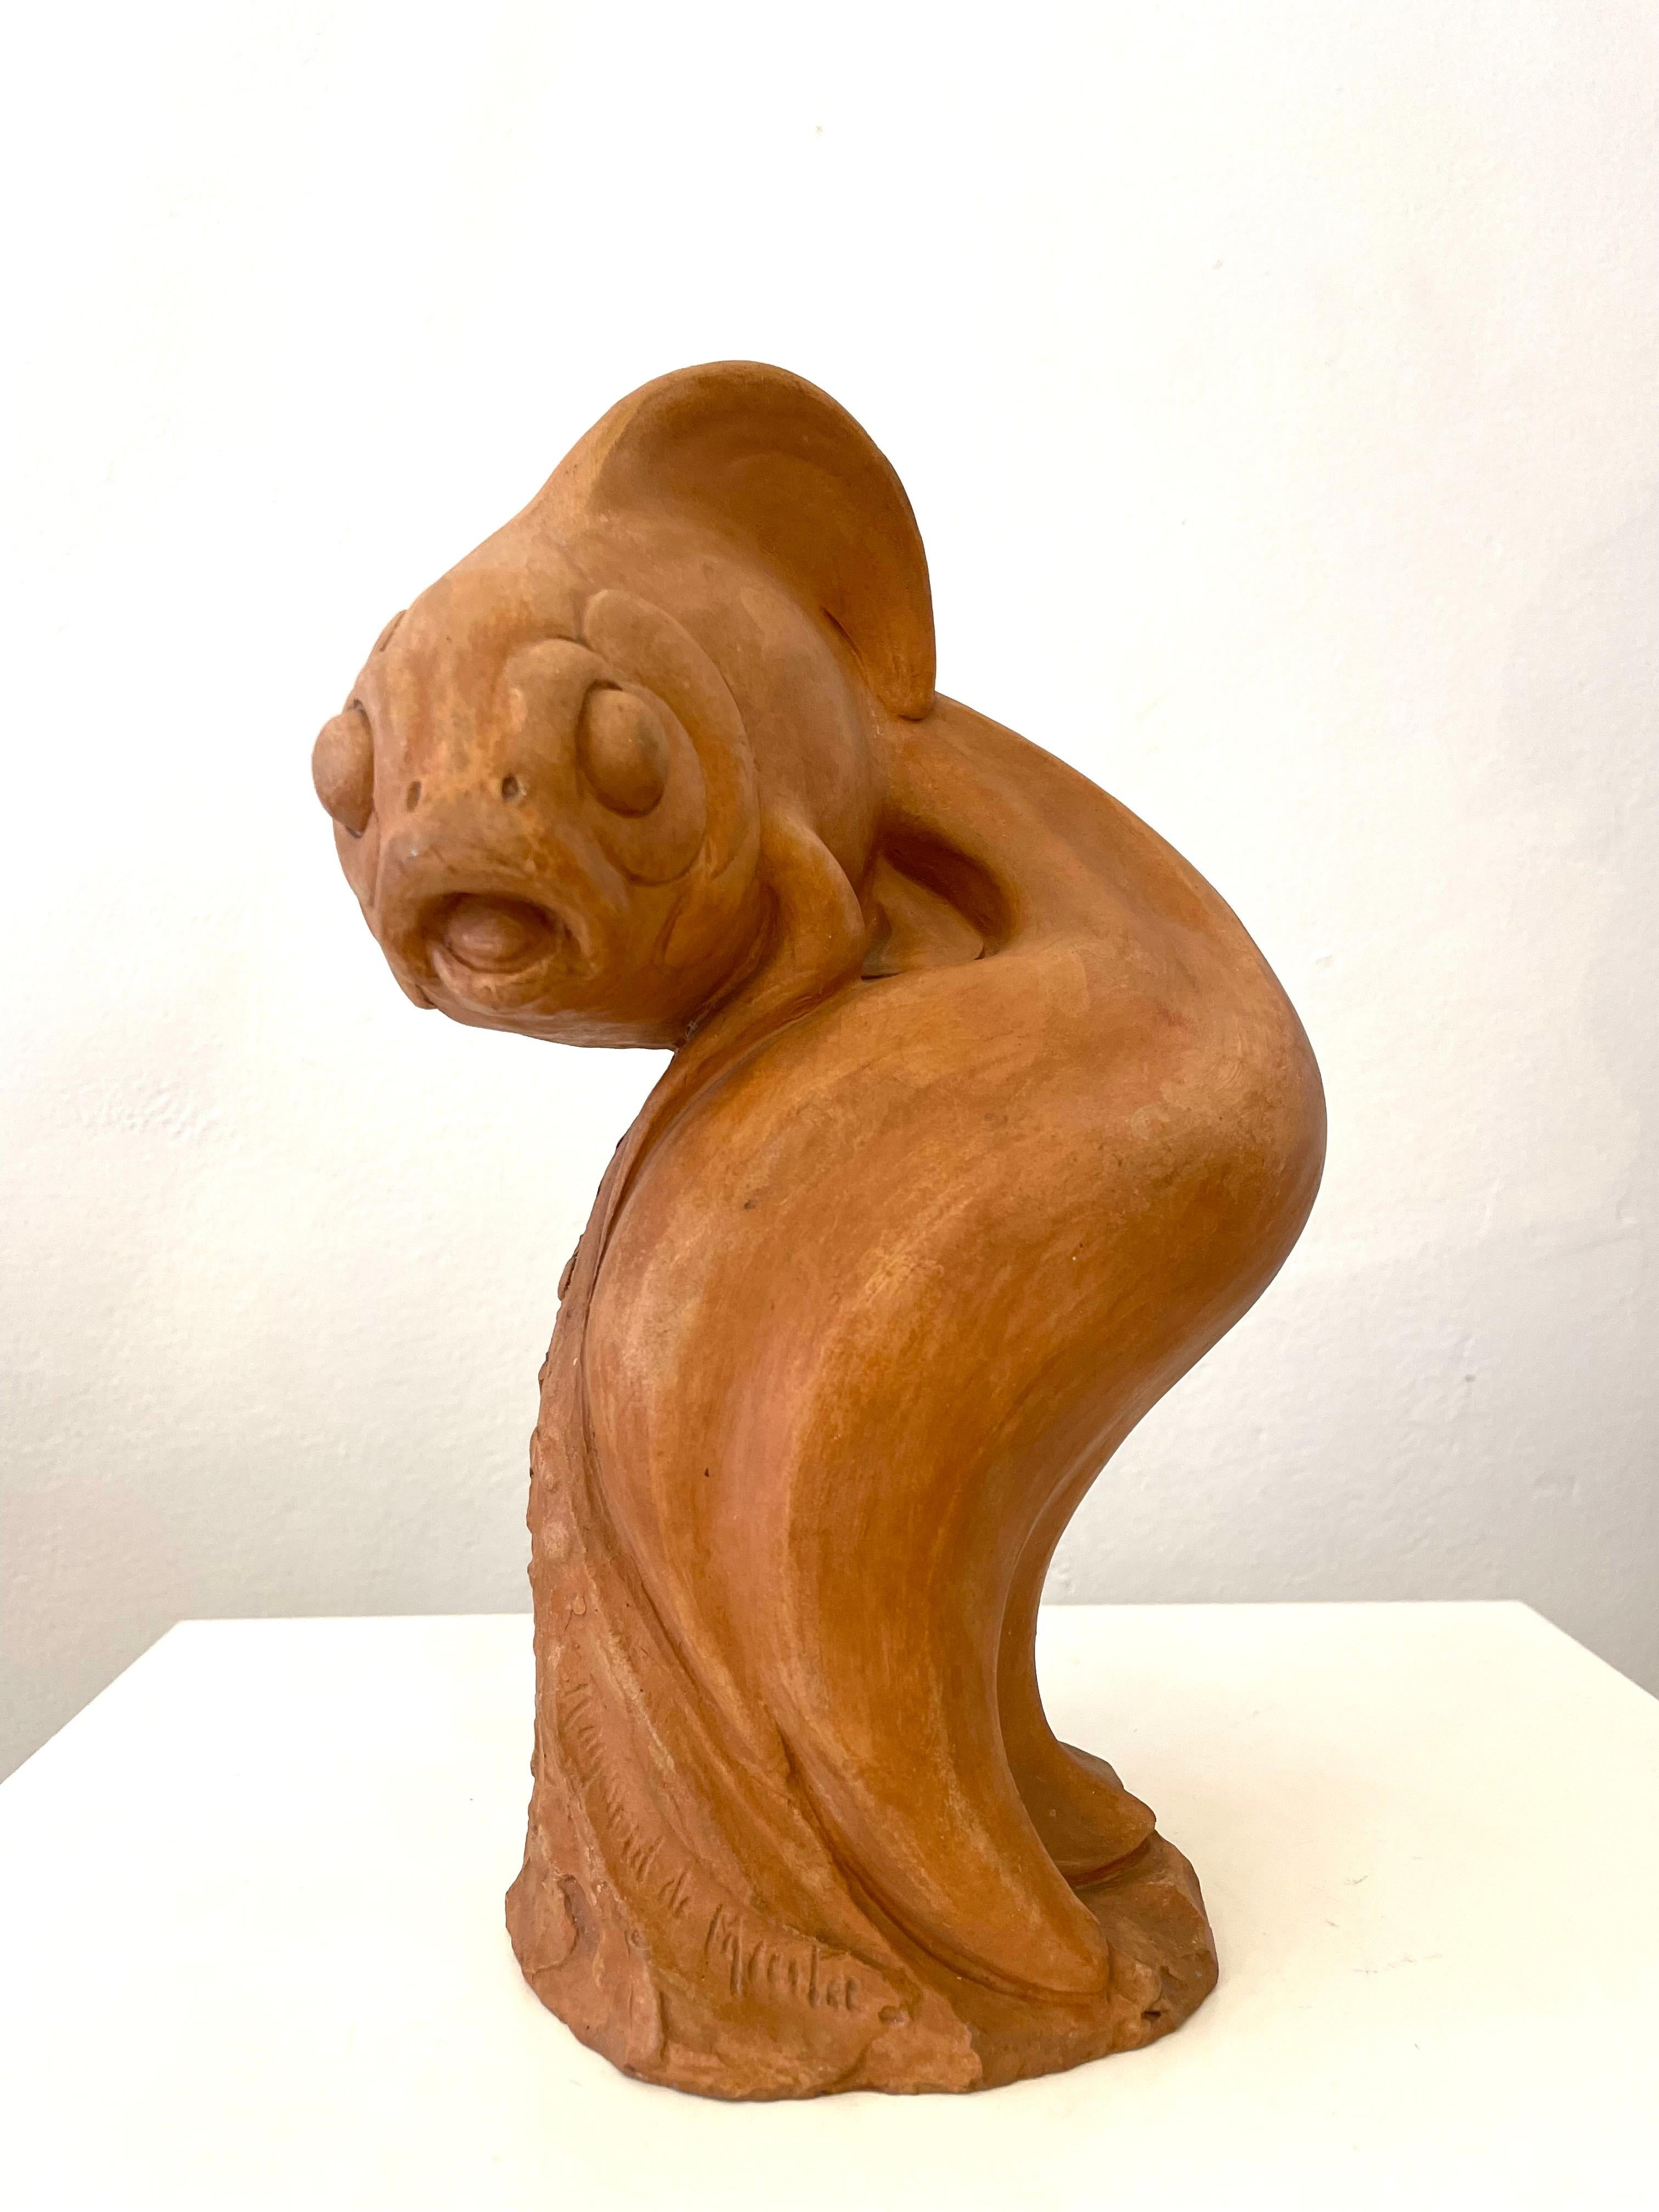 Terracotta fish sculpture by Raymond de Meester - Belgium, 1940s.